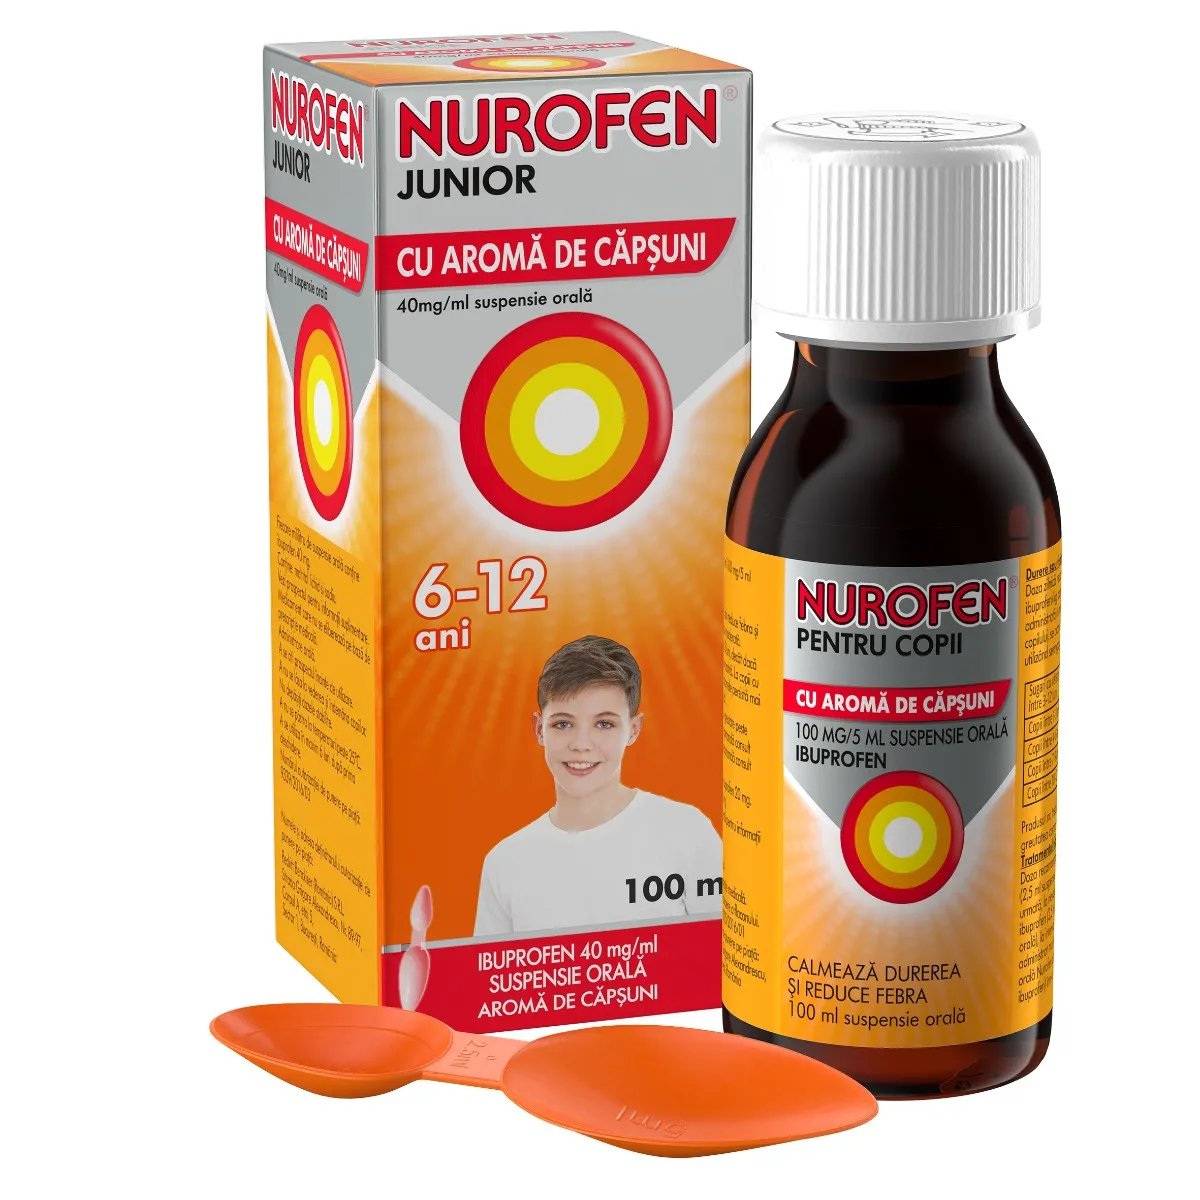 Nurofen Junior cu aroma de capsuni 6-12 ani, 100 ml, Reckitt Benckiser